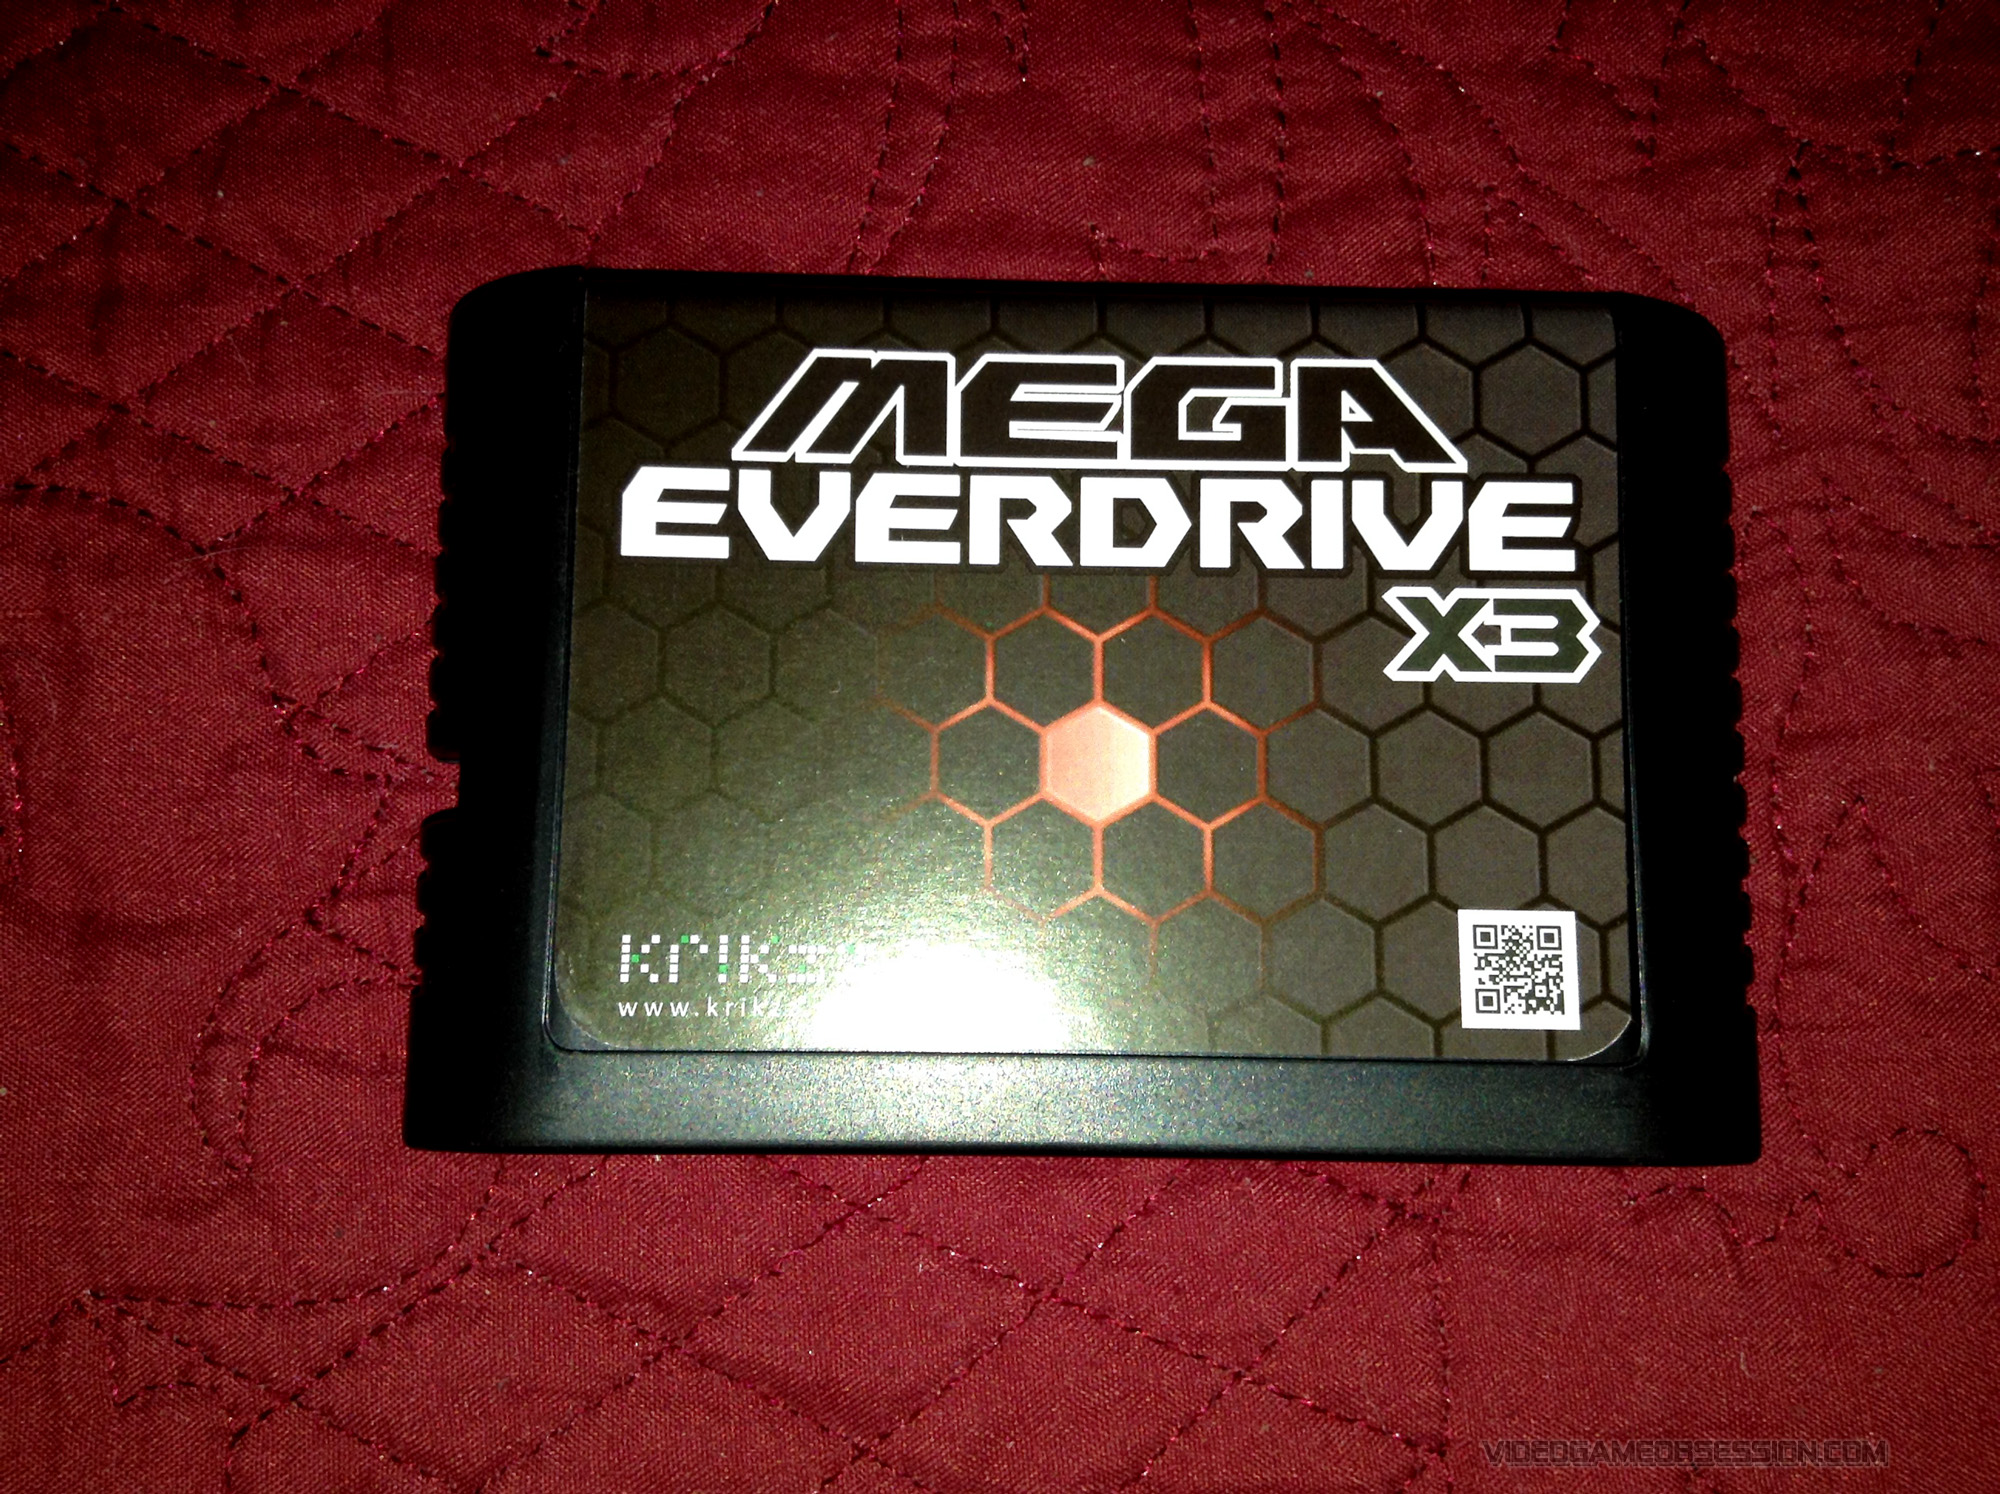 Mega Everdrive X3 @ Video Game Obsession (c) 1996 - (current)